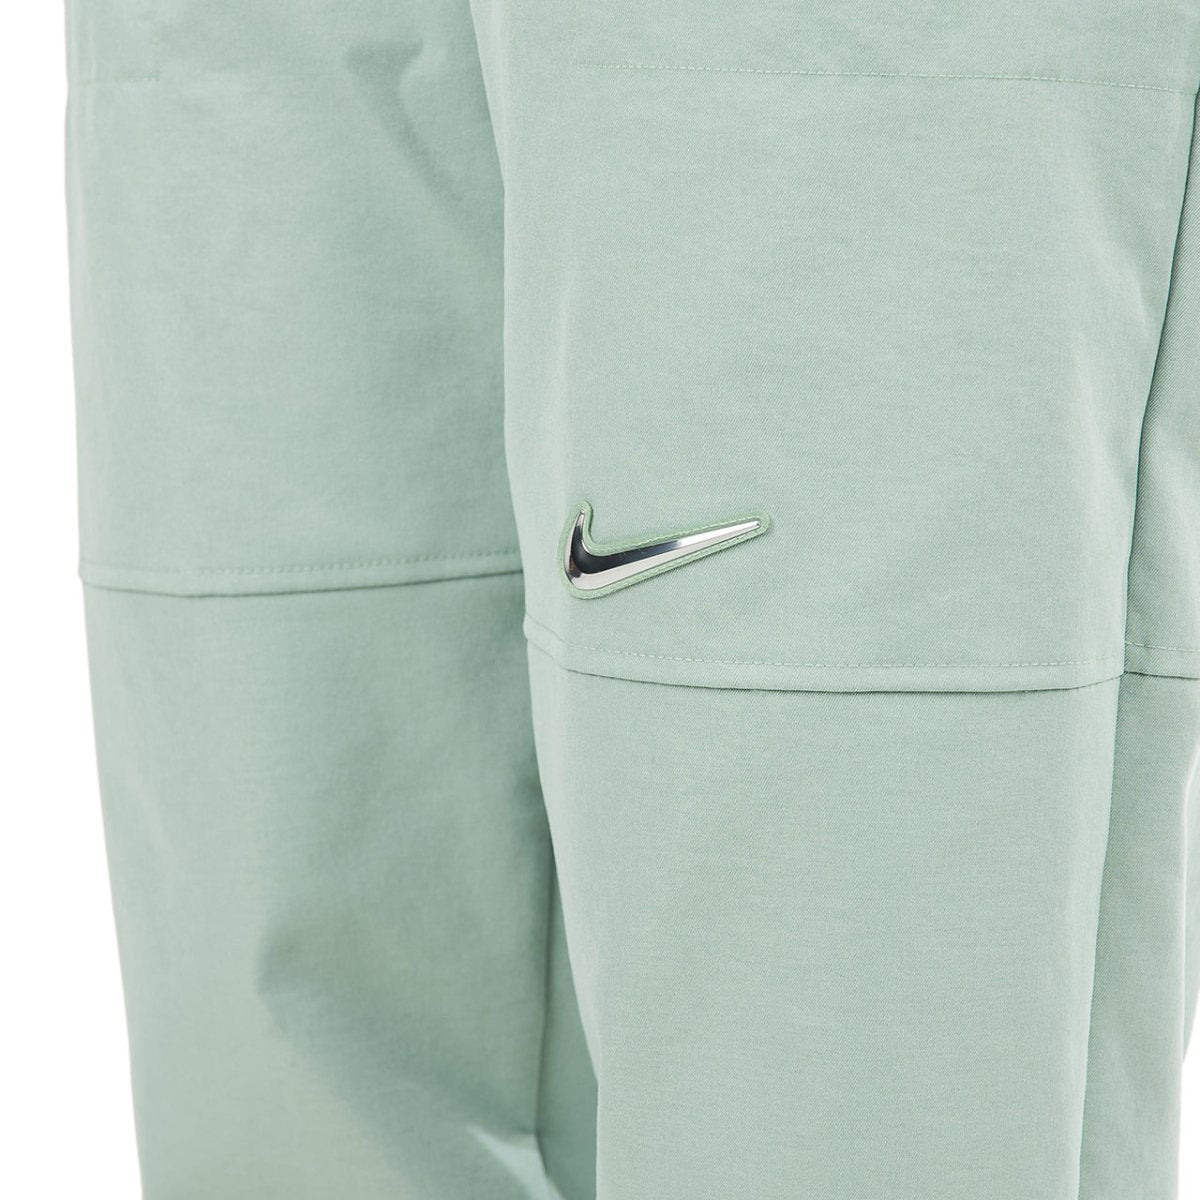 Nike WMNS Woven Swoosh Pants (Grün)  - Allike Store